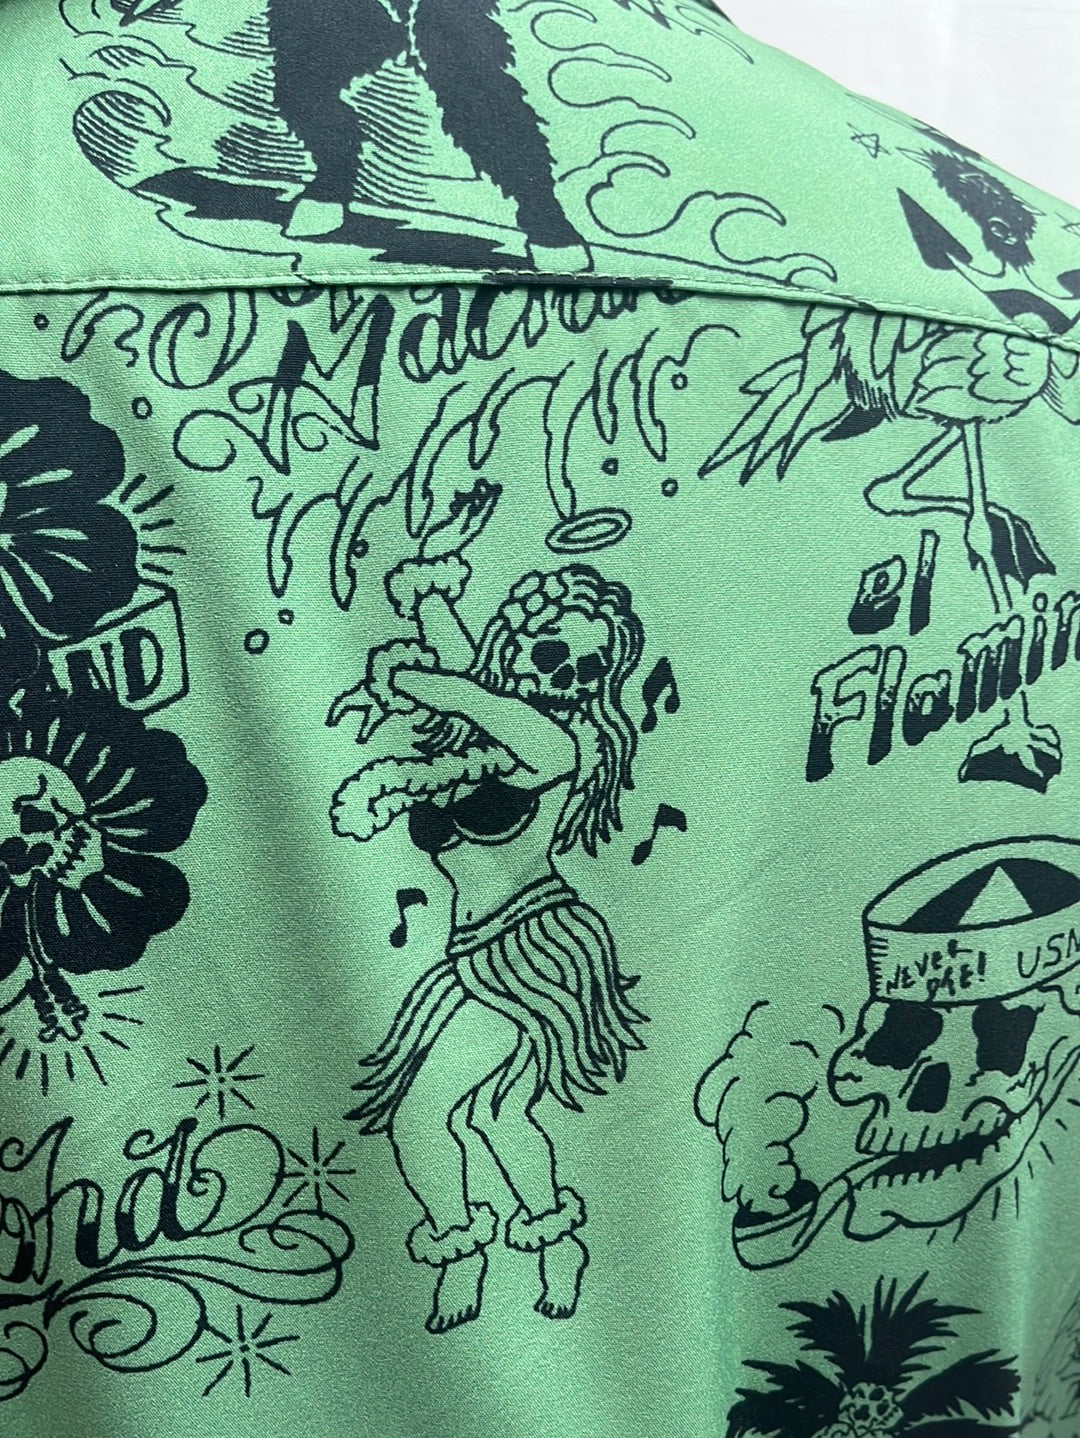 RARE -- RFAUSTNIY green print Death-themed Hawaiian Shirt -- M